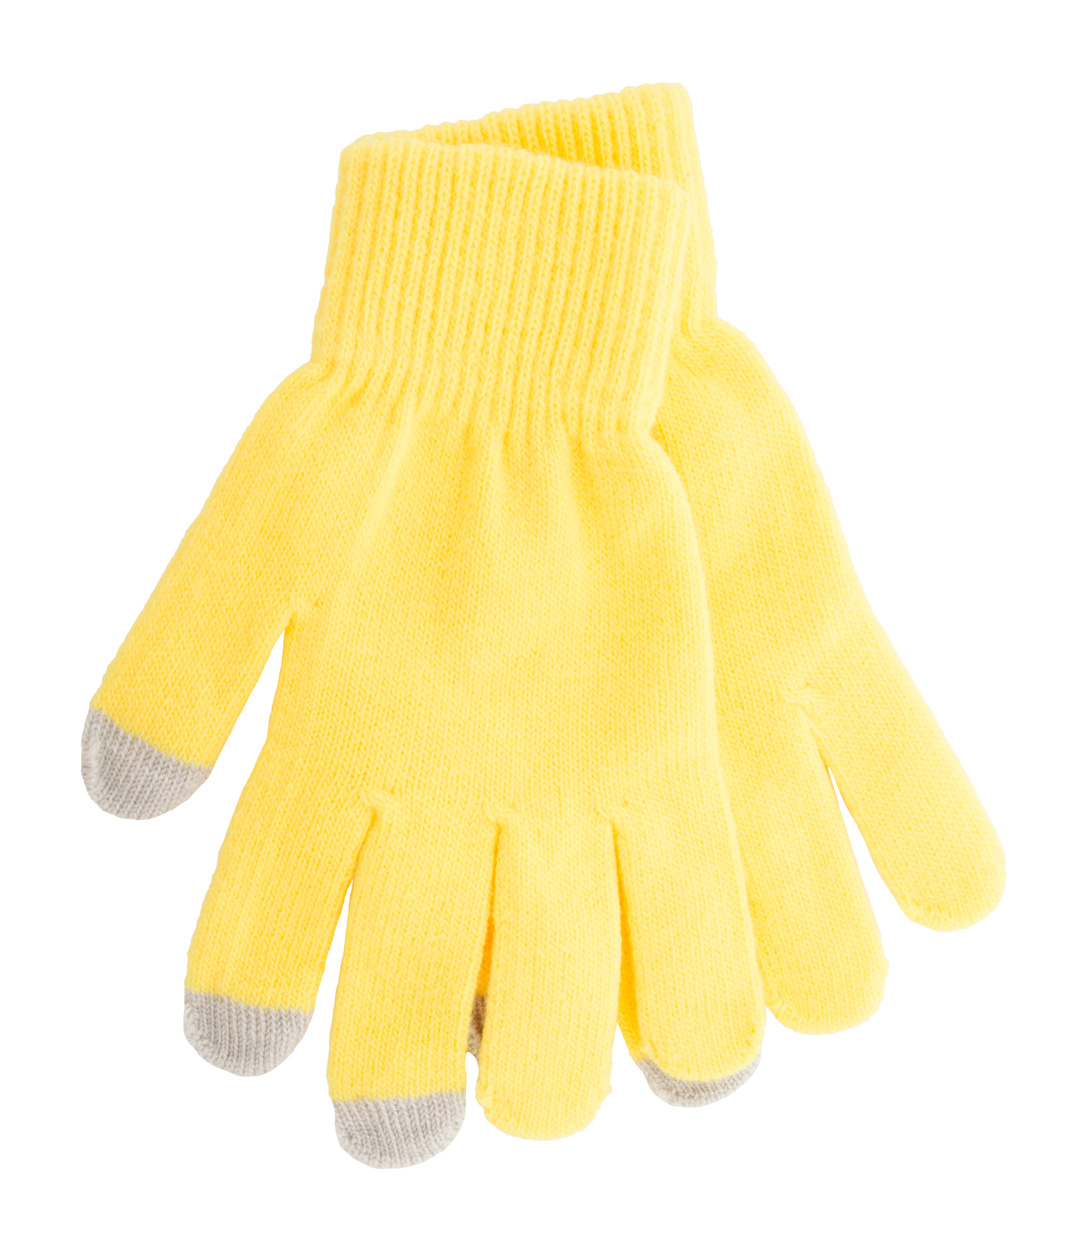 Promo  Actium rukavice osjetljive na dodi zaslona, žute boje